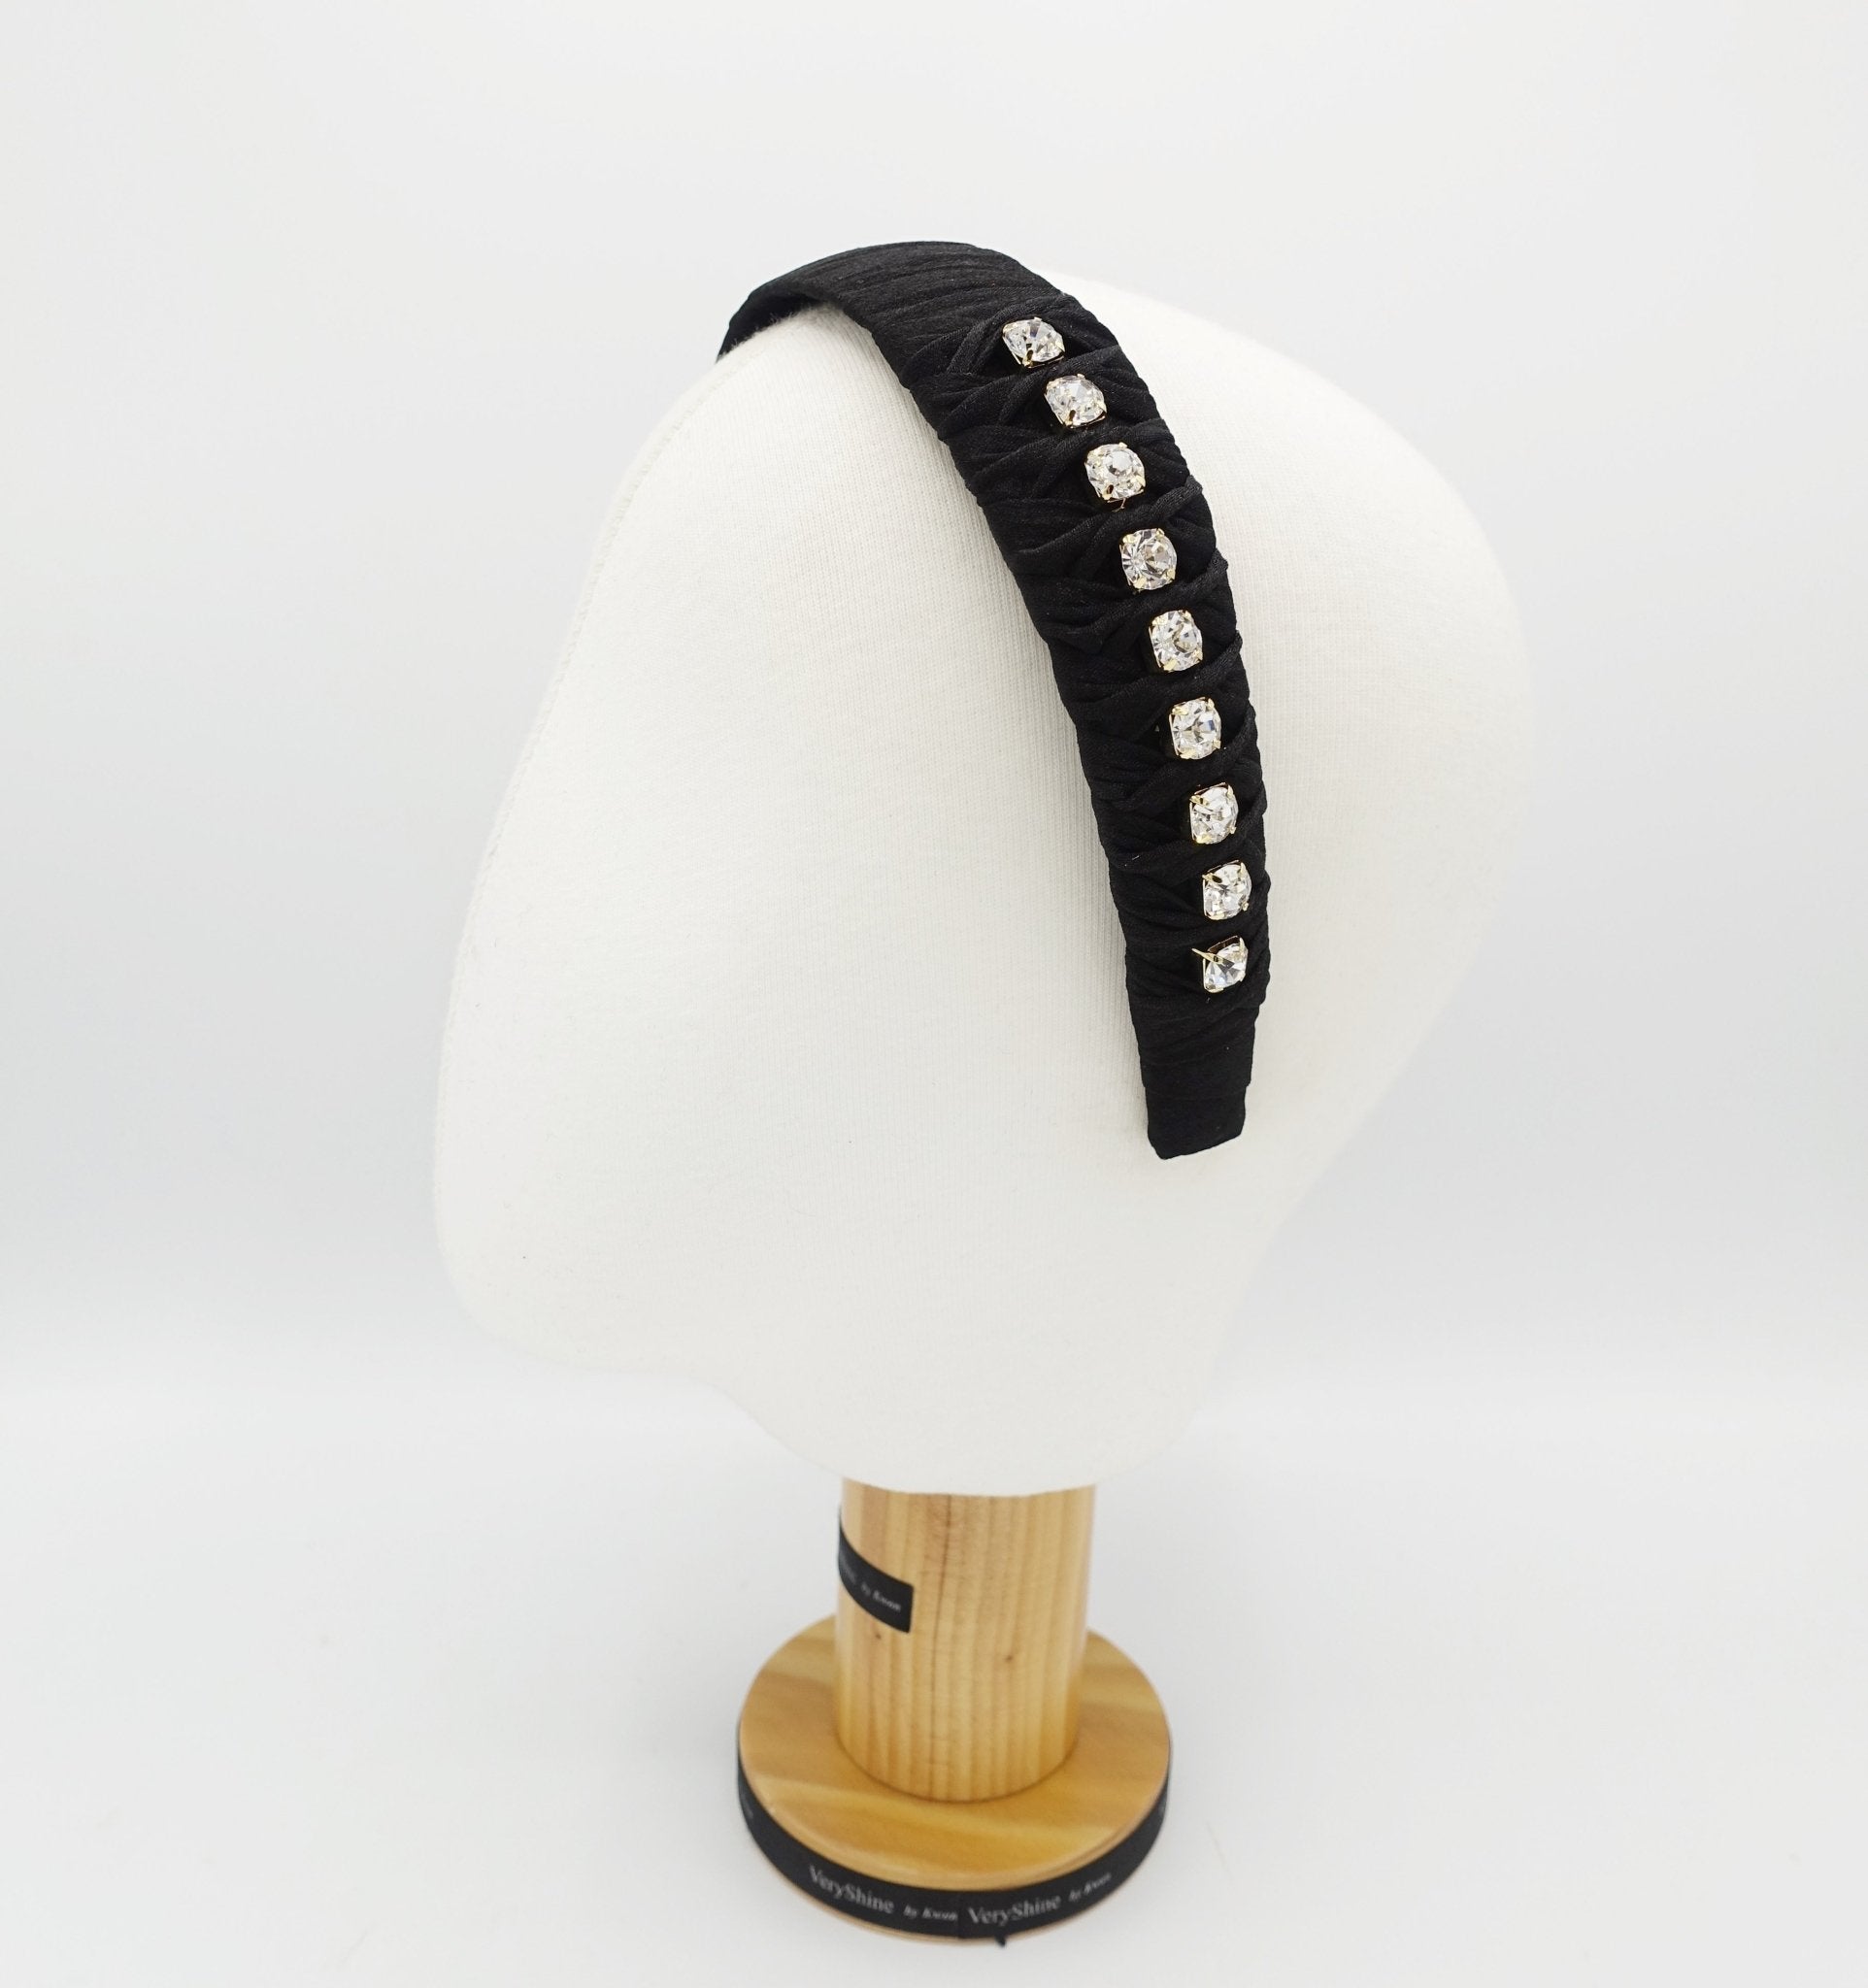 veryshine.com hairband/headband rhinestone embellished headband twist wrap hairband women hair accessory